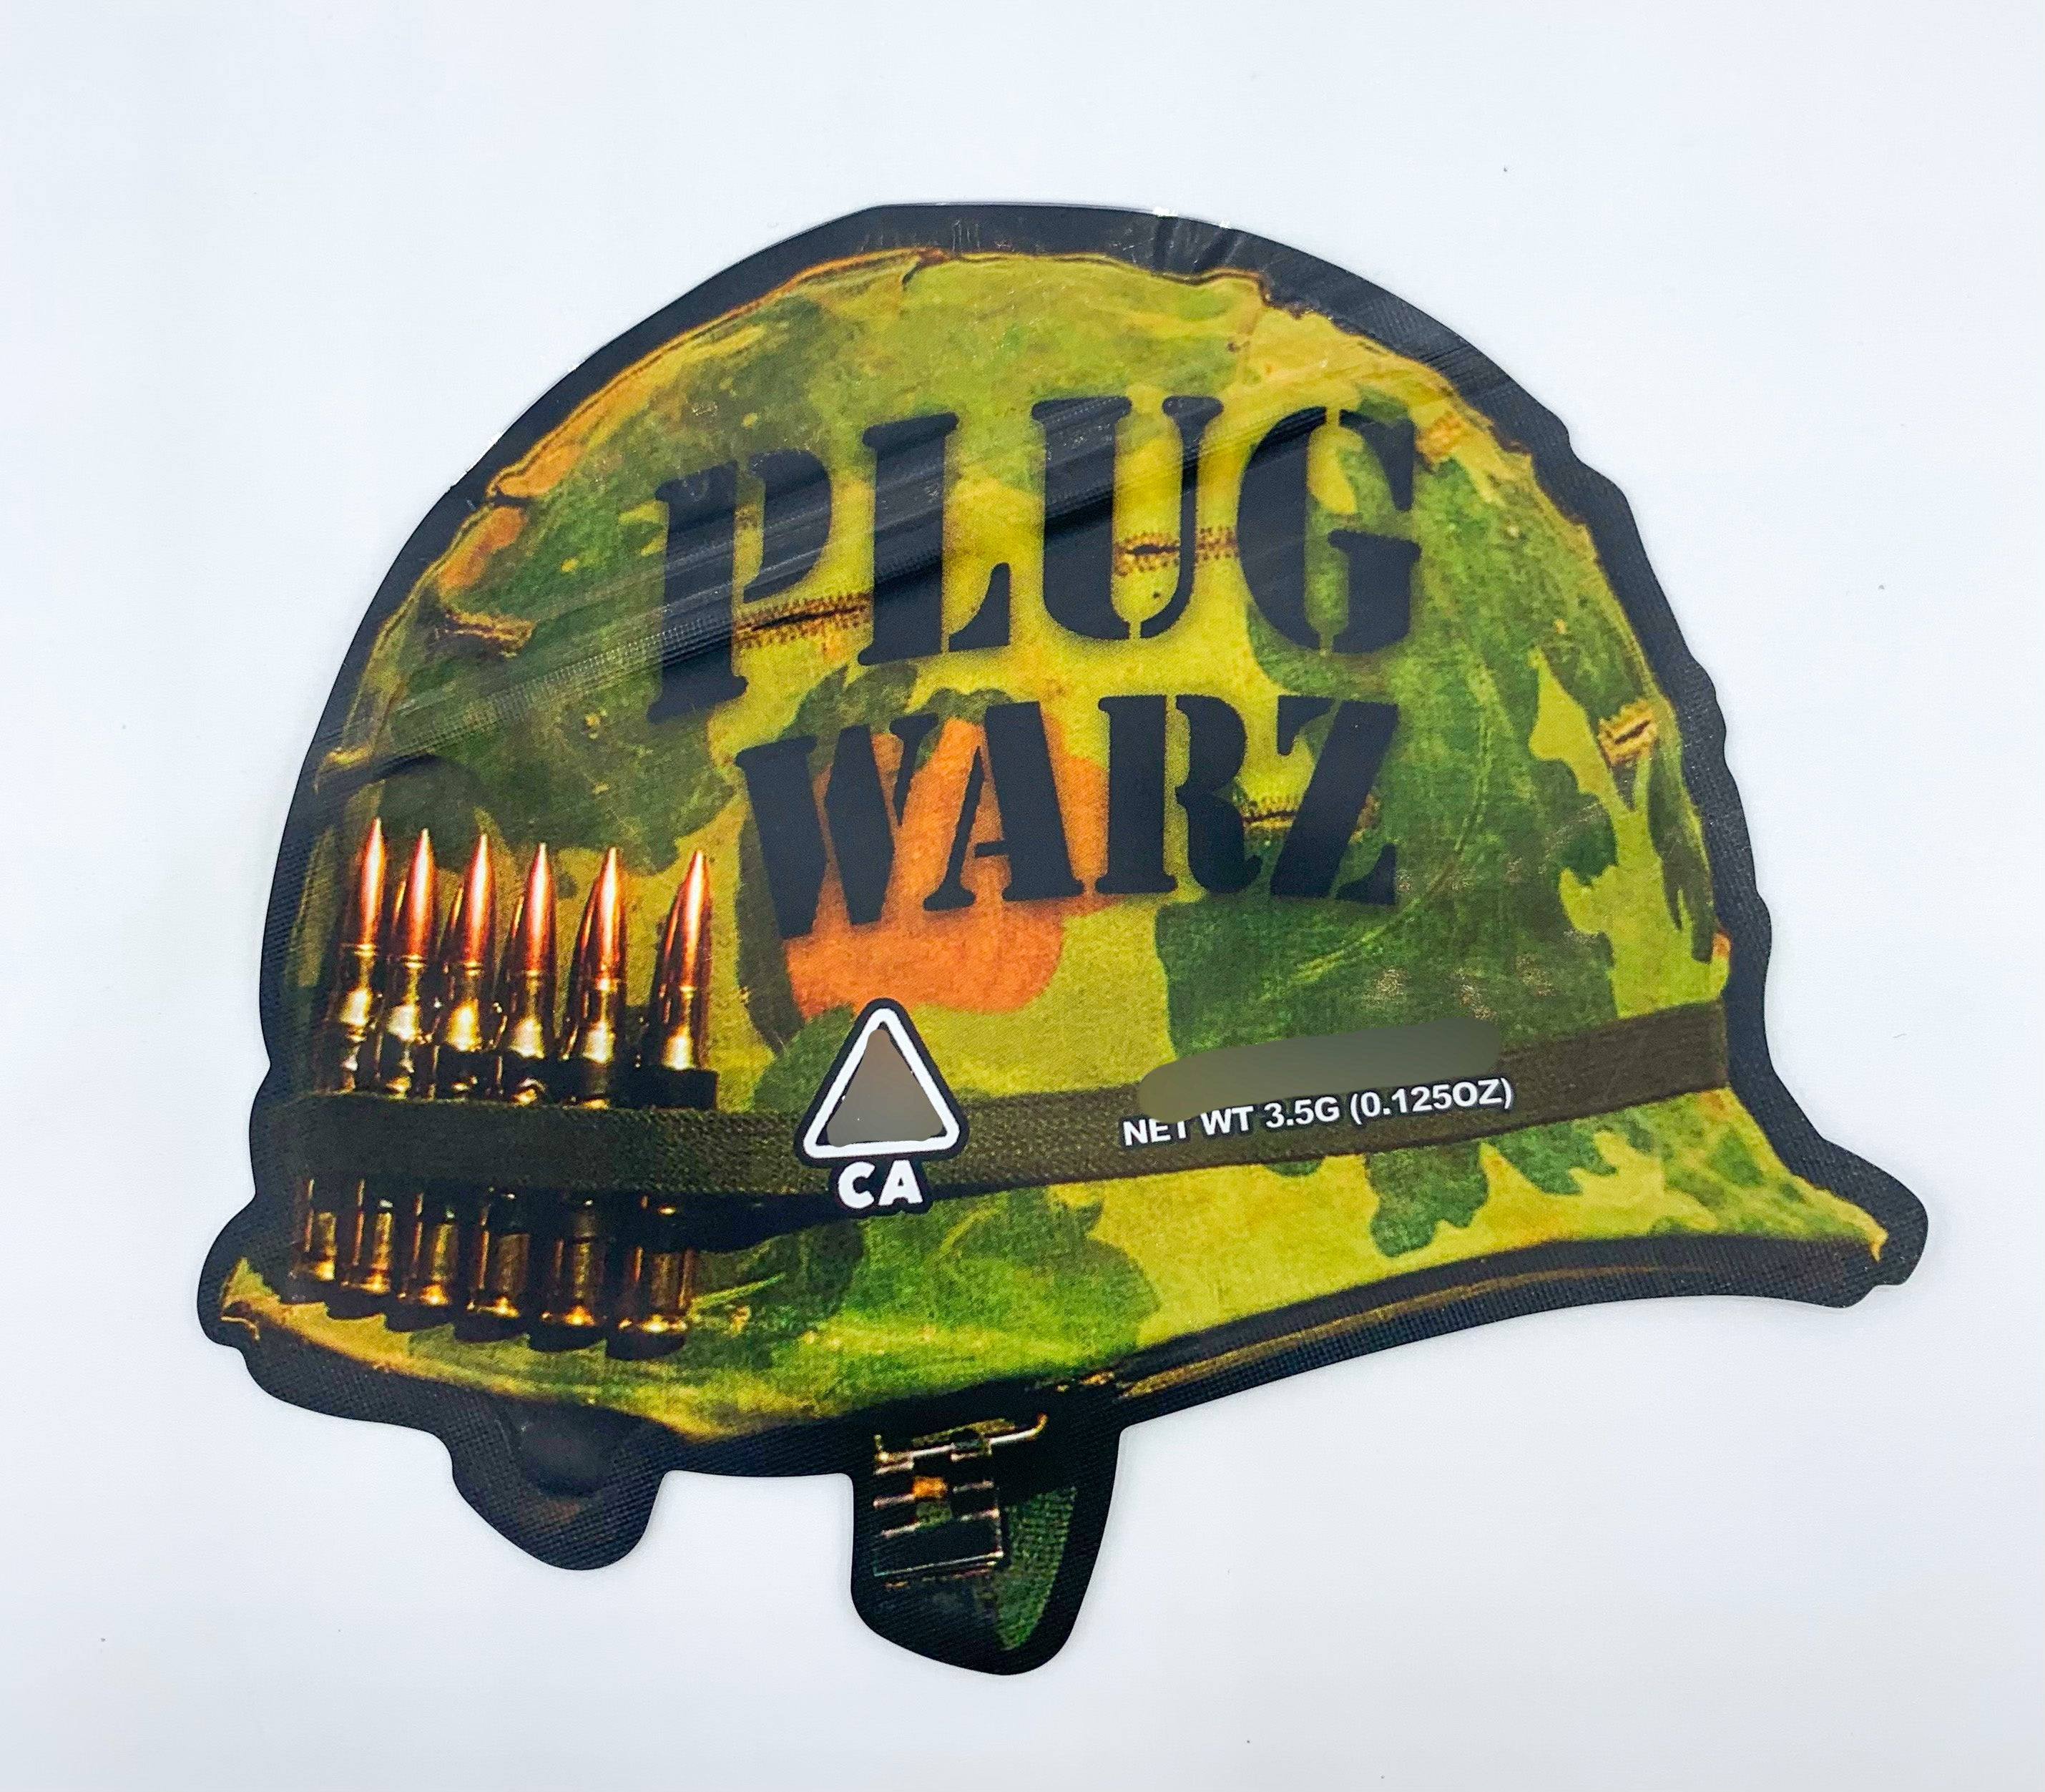 3D Plug Wars 3.5g Mylar bags